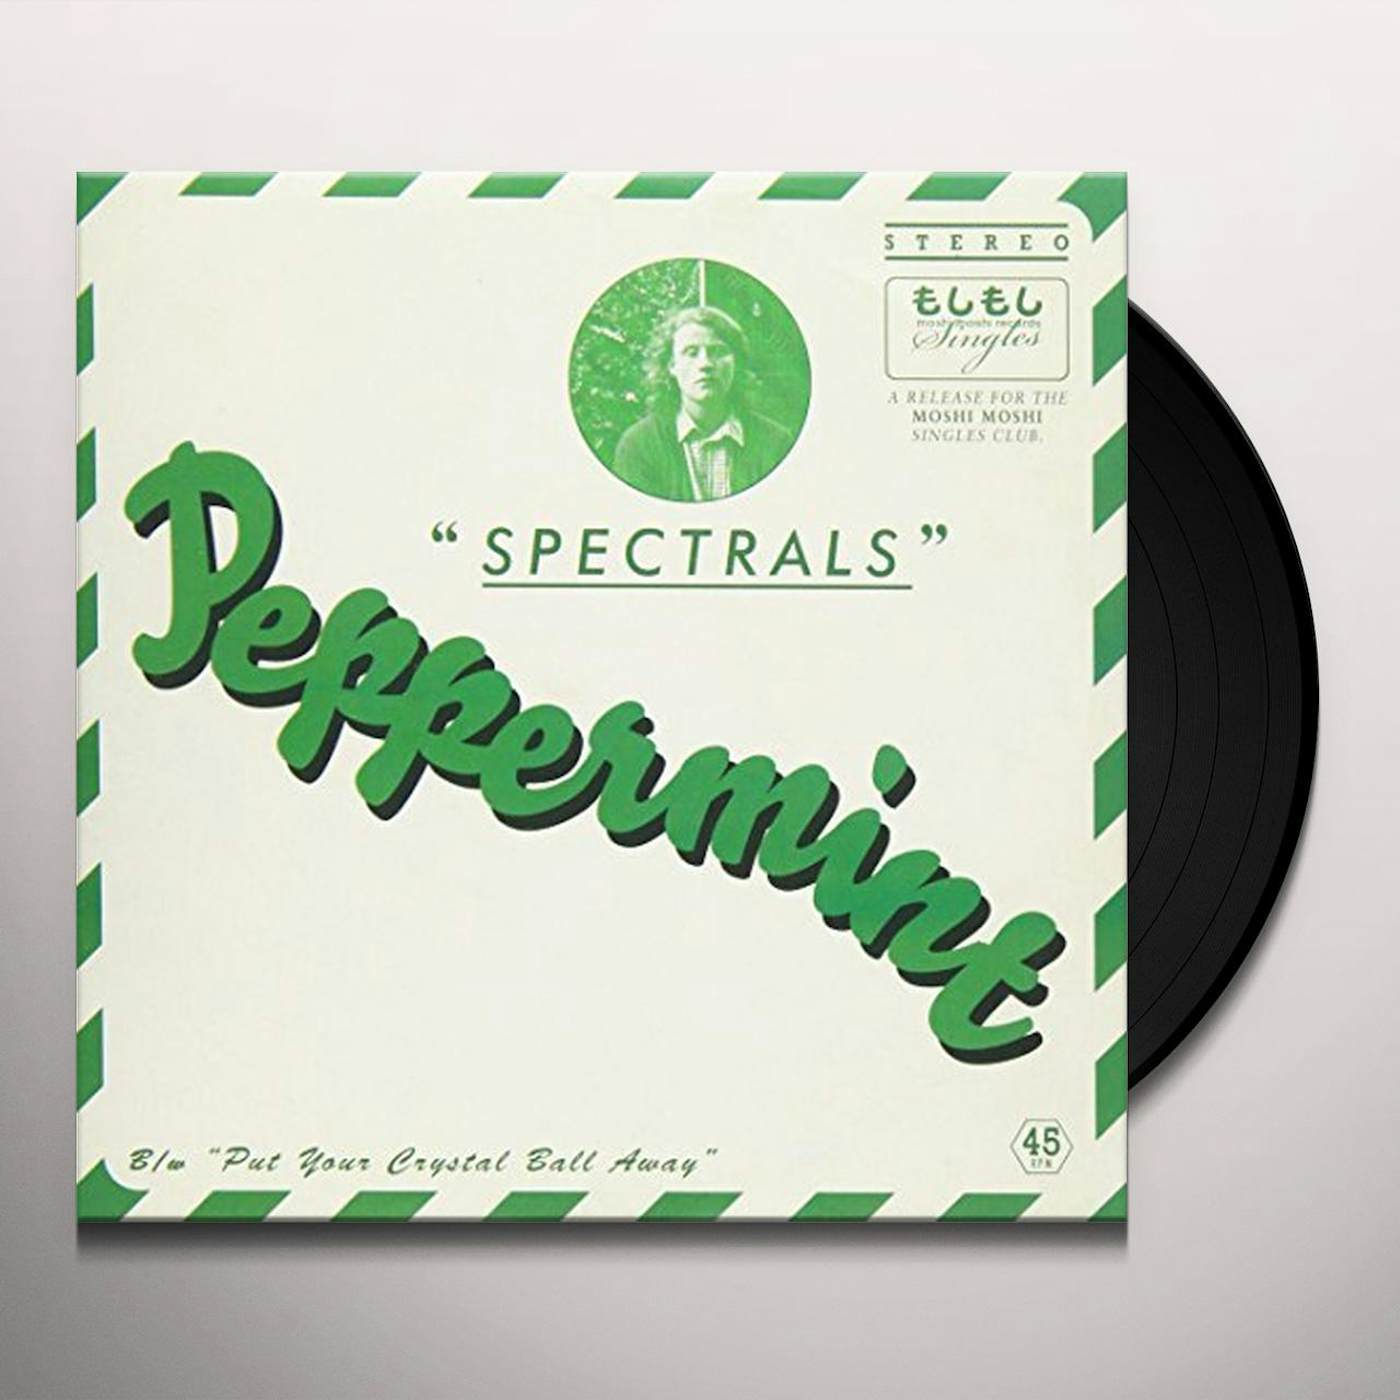 Spectrals Peppermint Vinyl Record